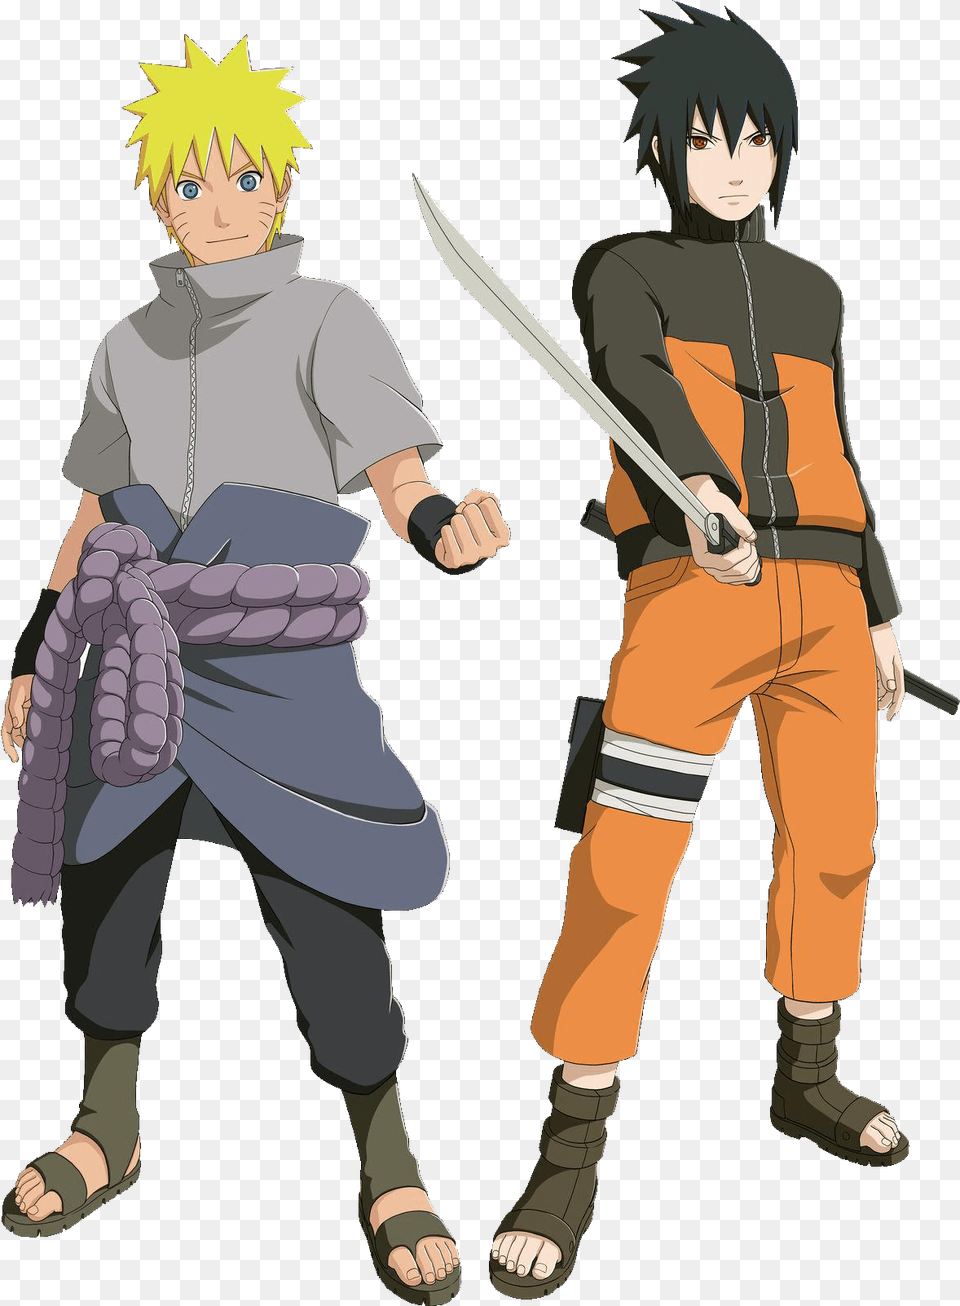 Sasuke In Naruto39s Clothes, Comics, Publication, Book, Sword Png